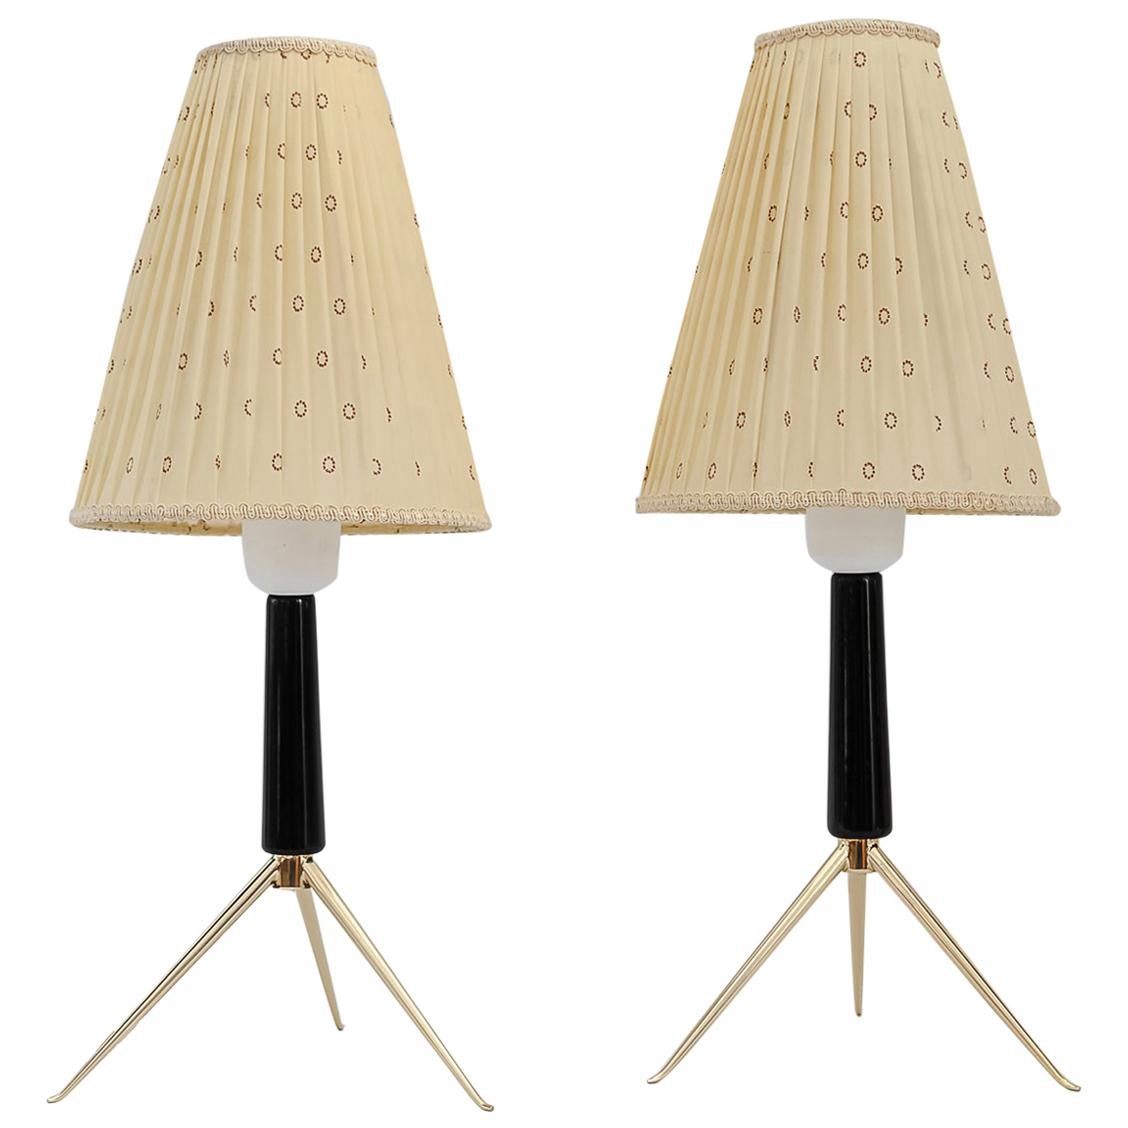 Two Rupert Nikoll Table Lamps, Vienna, circa 1950s